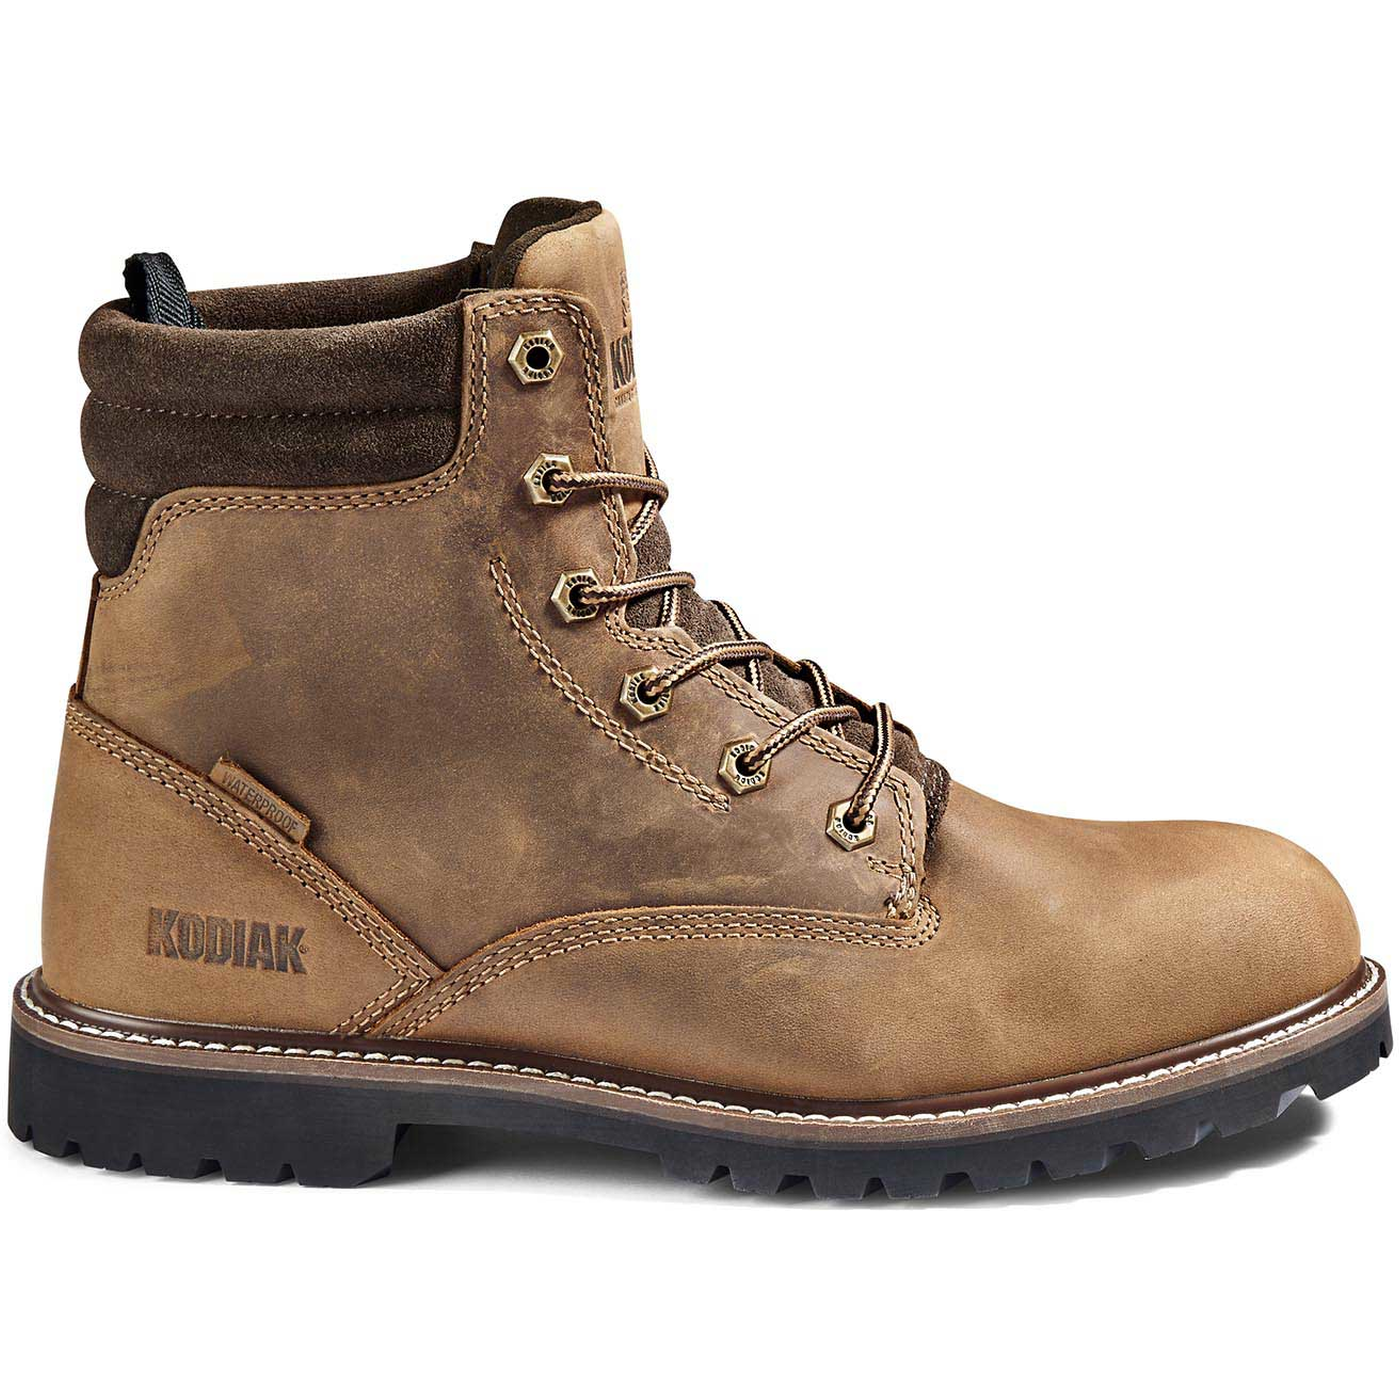 Kodiak Men's Mckinney 6" WP Slip Resist Safety Work Boot -Brown- 4TDQBN 7 / Wide / Brown - Overlook Boots